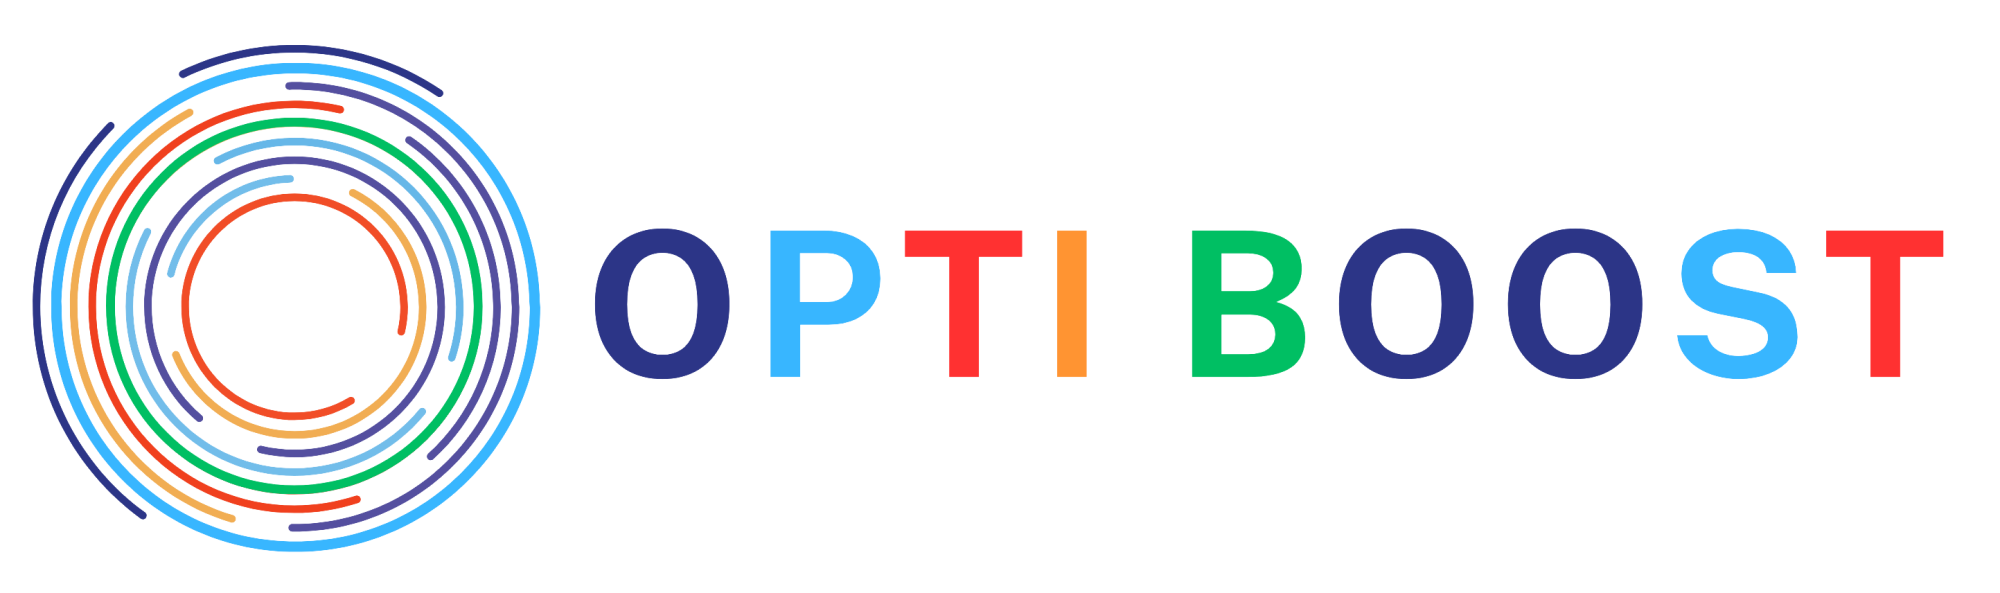 Optiboost Logo